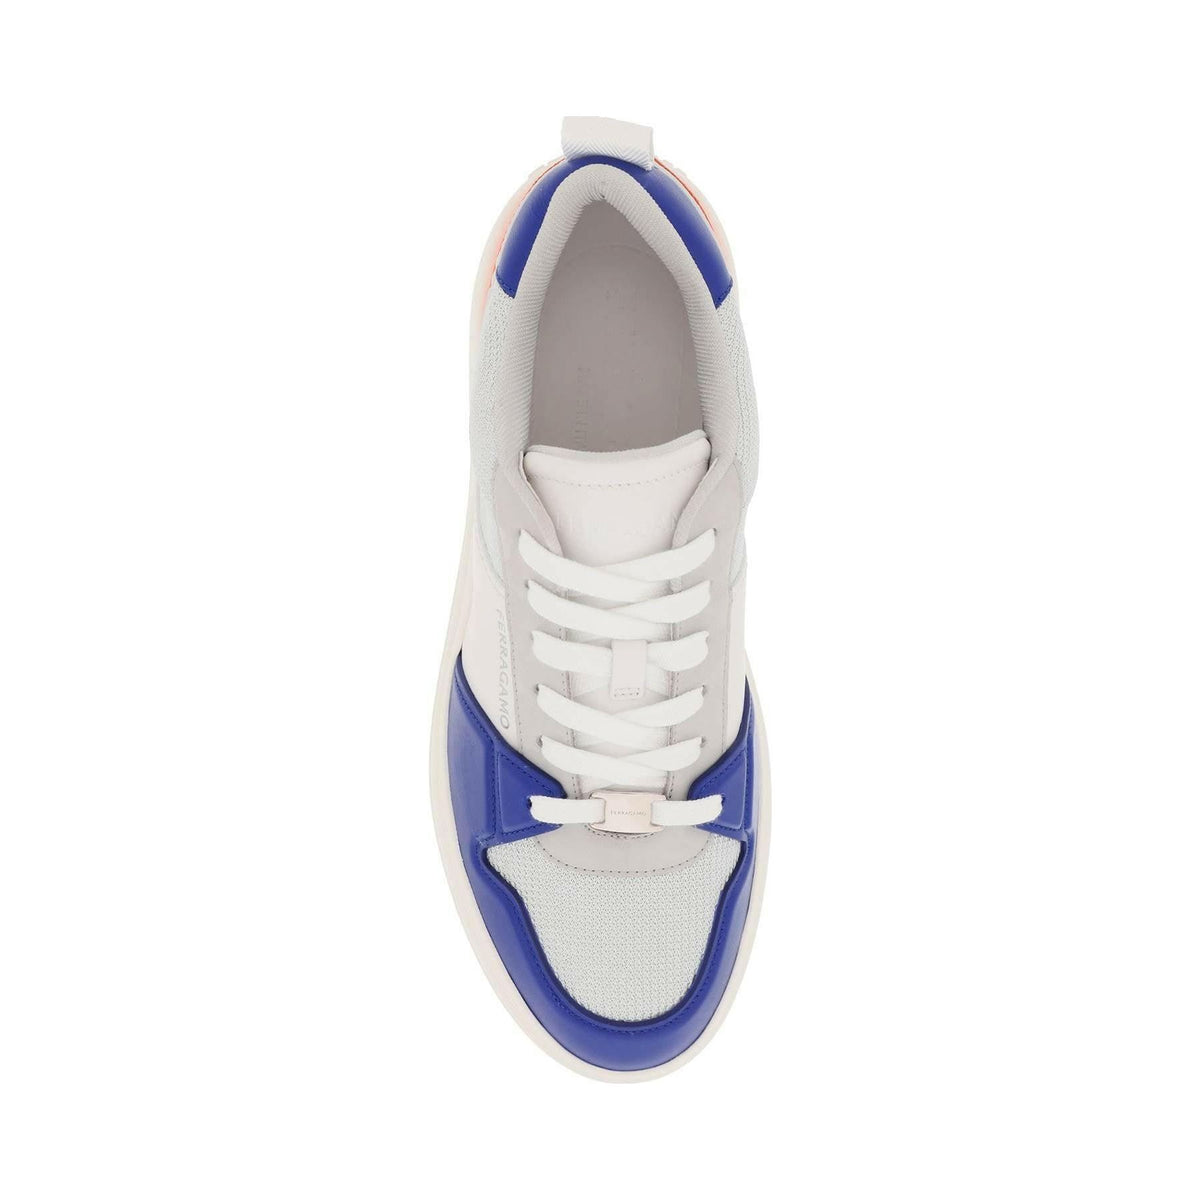 White, Grey and Lapis Lazuli Low Cut Sneakers FERRAGAMO JOHN JULIA.